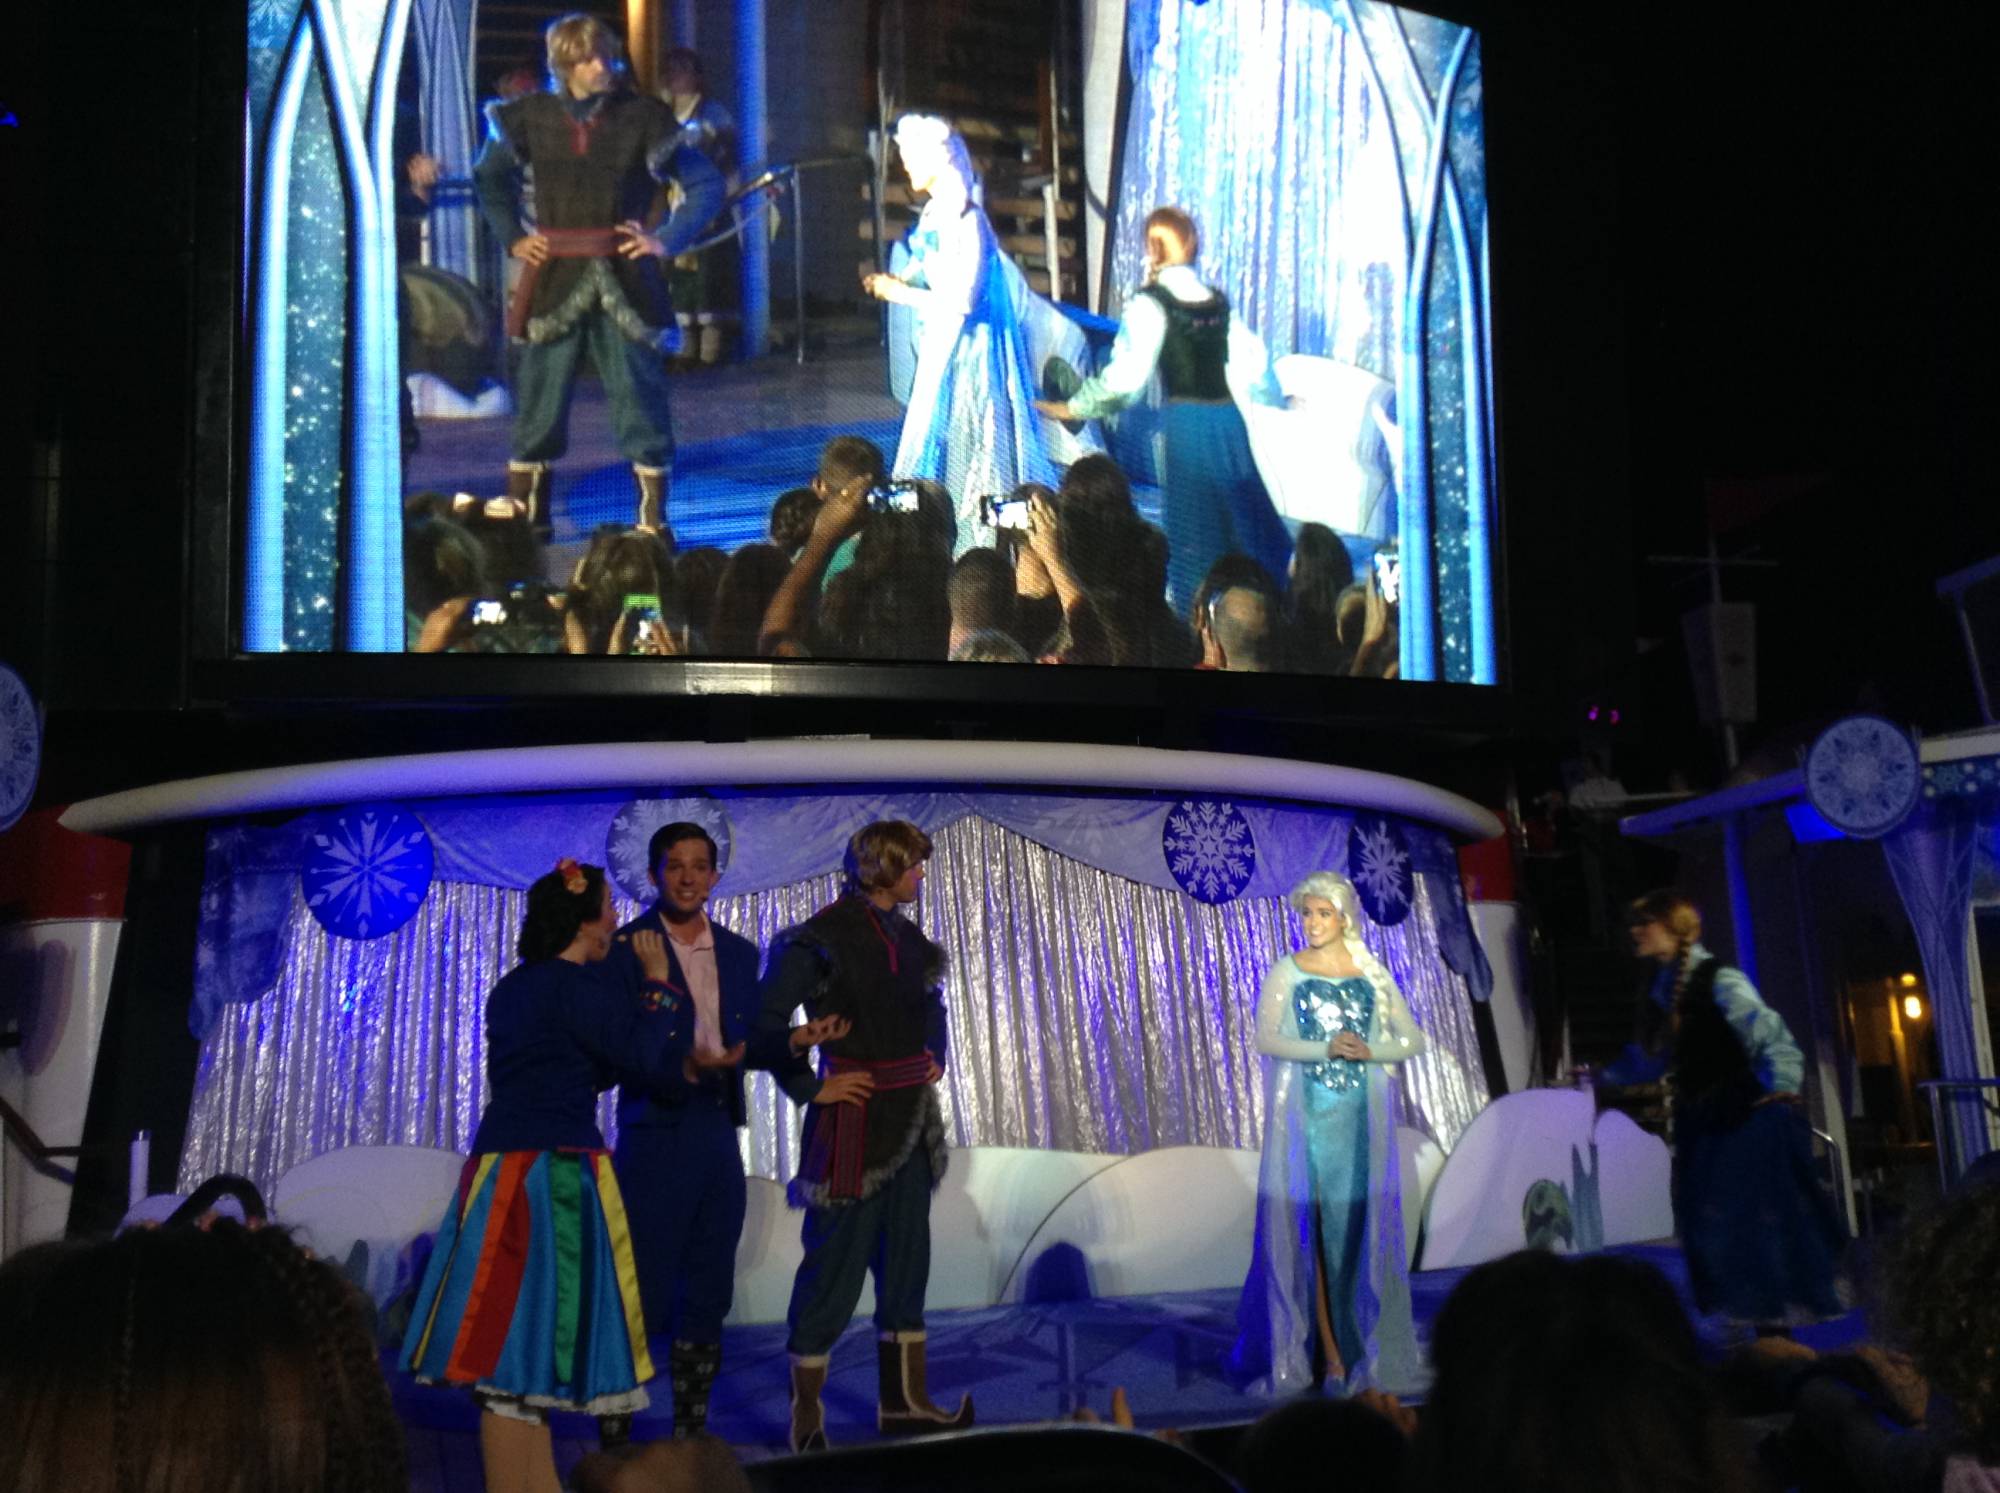 Enjoy the 'Freeze the night away' event on the Disney Wonder | PassPorter.com